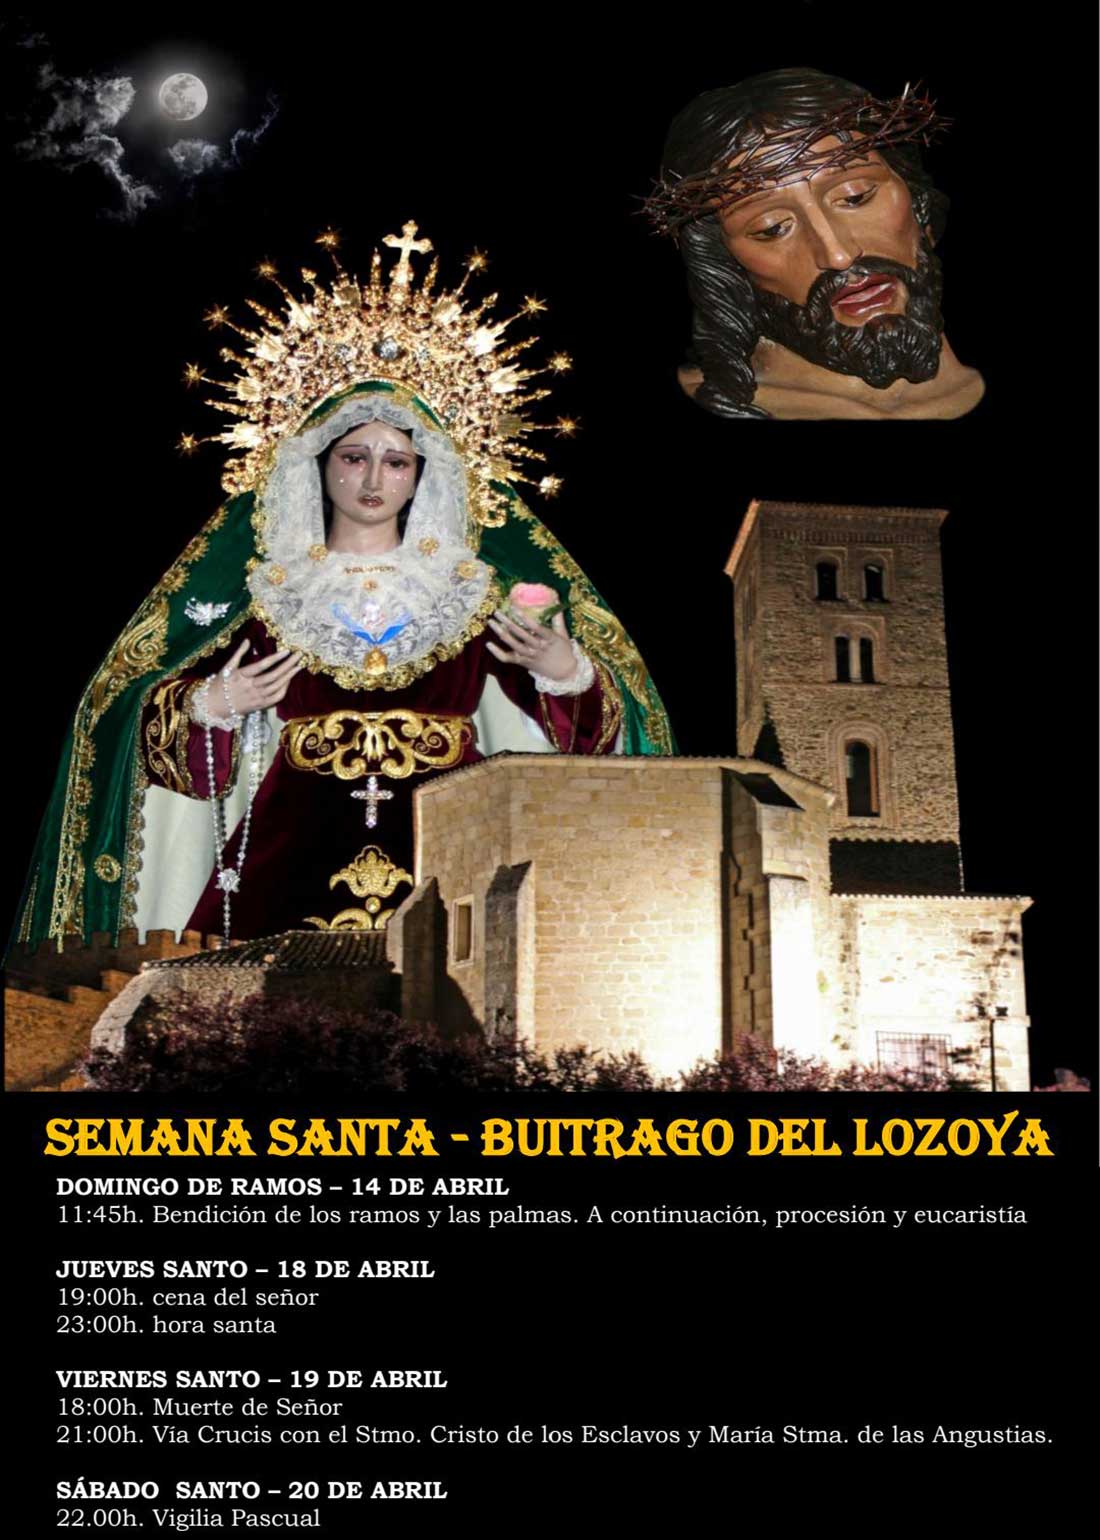 Semana Santa Buitrago del Lozoya 2019